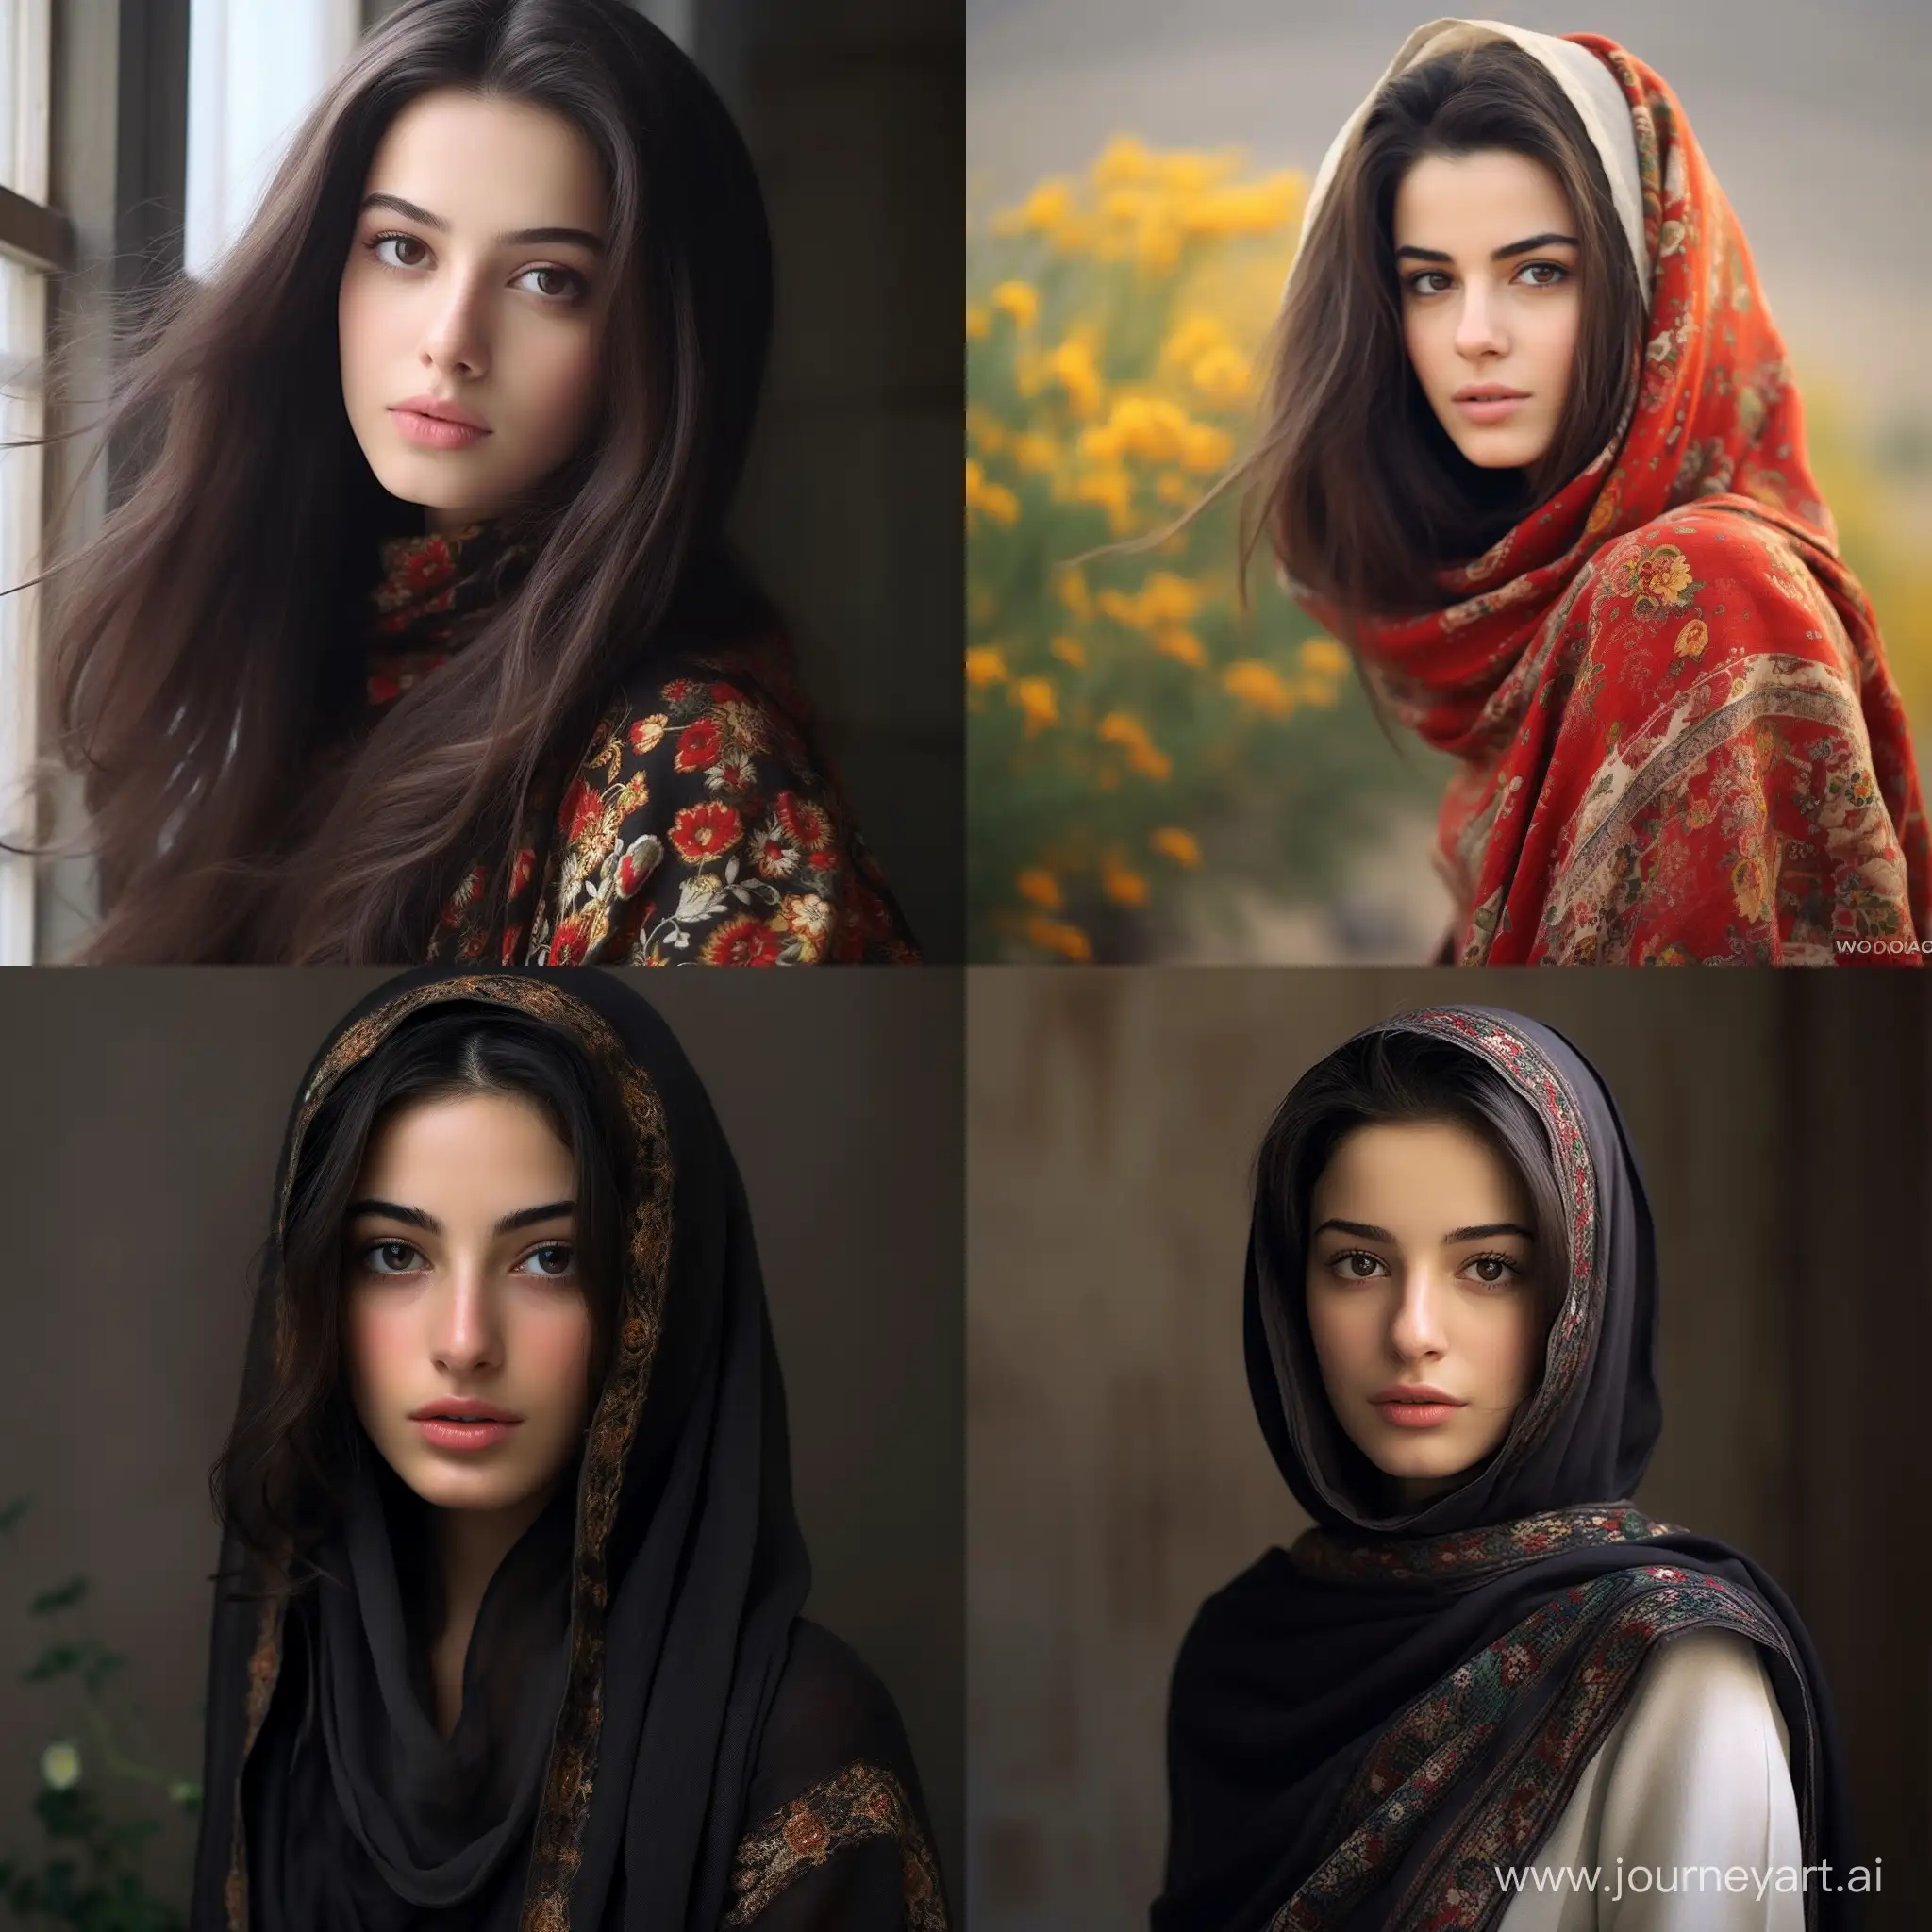 Charming-Iranian-Model-in-Artistic-Portrait